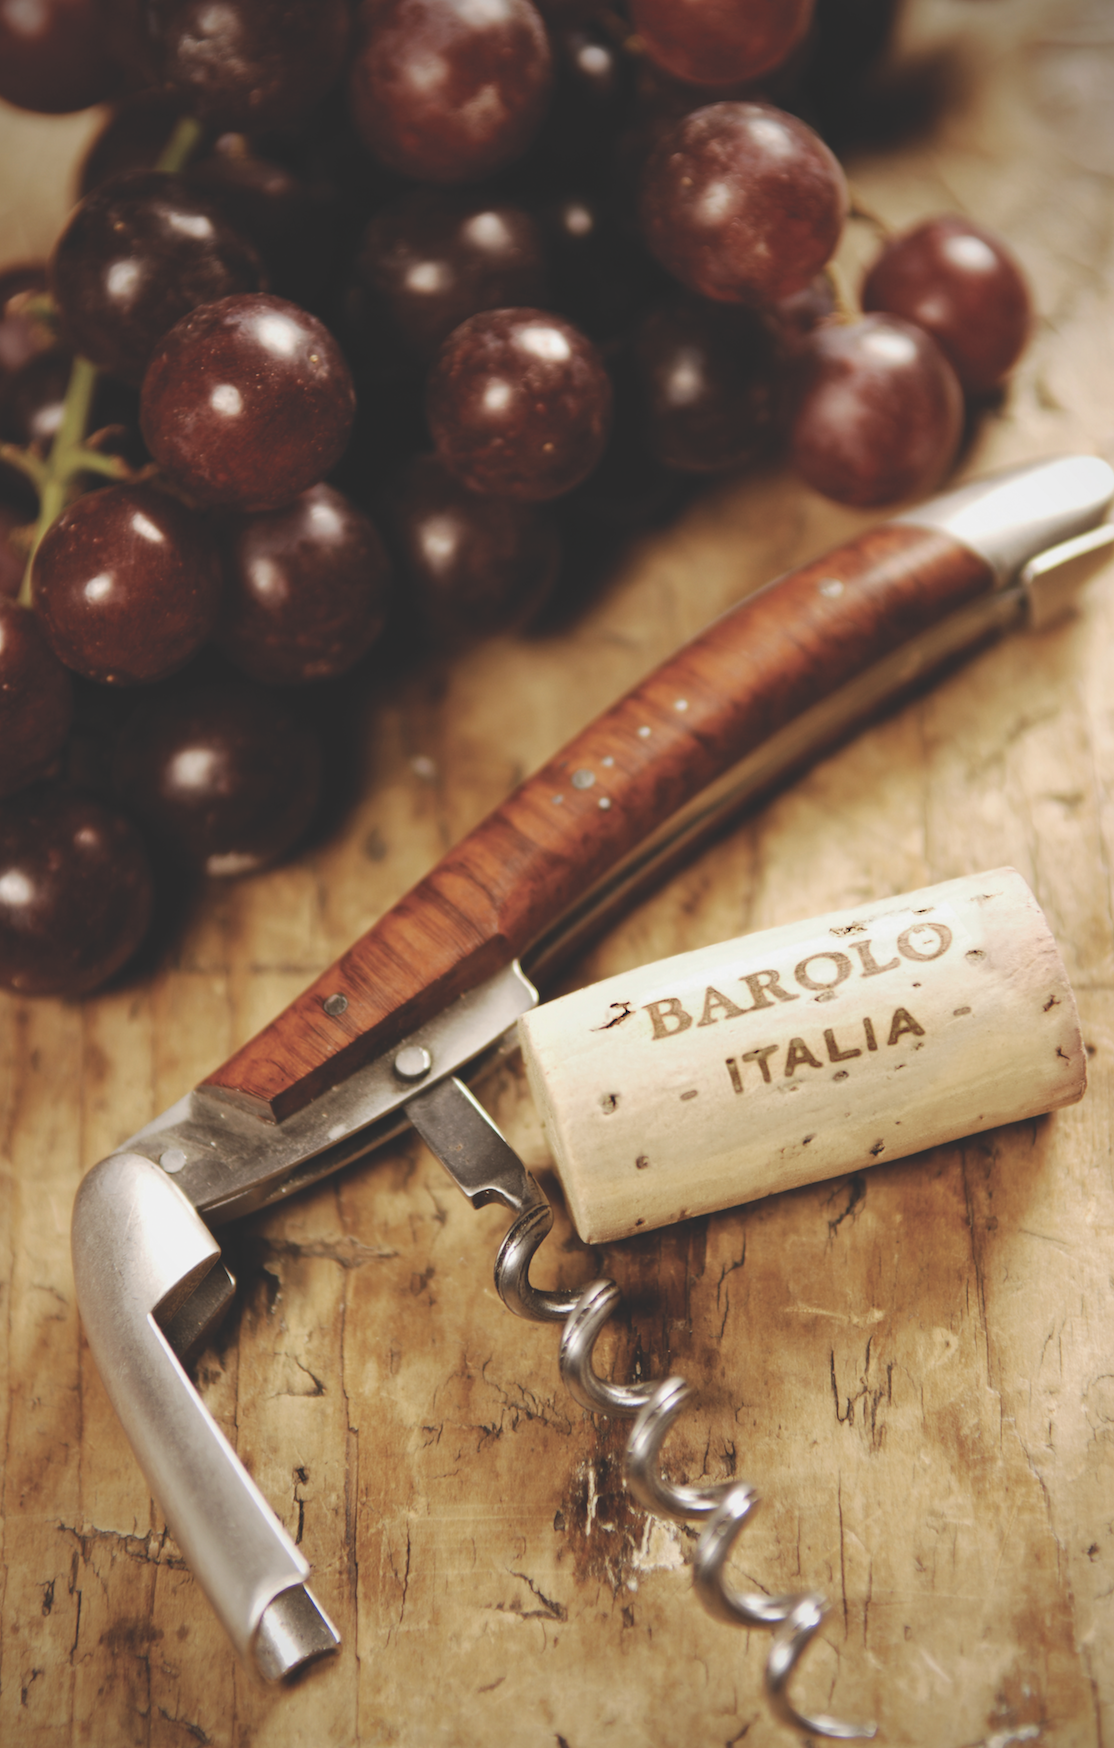 Barolo Wine - Italia! Icons